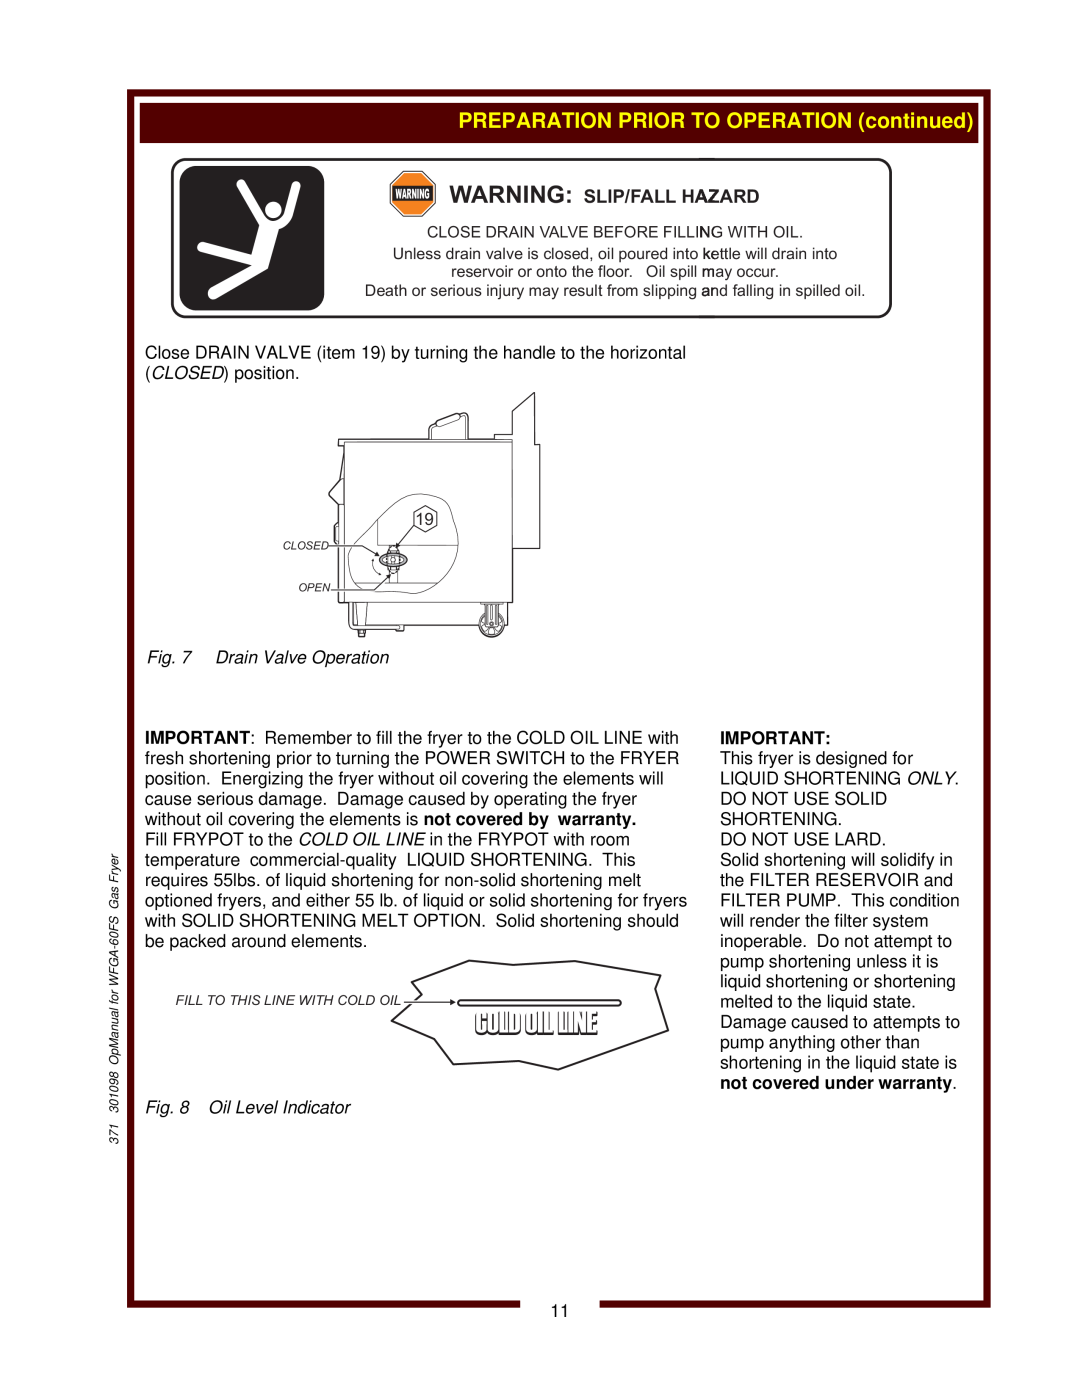 Wells WFGA-60FS operation manual Warning Warning Slip/Fall Hazard, not covered under warranty, Cold Oil Line 